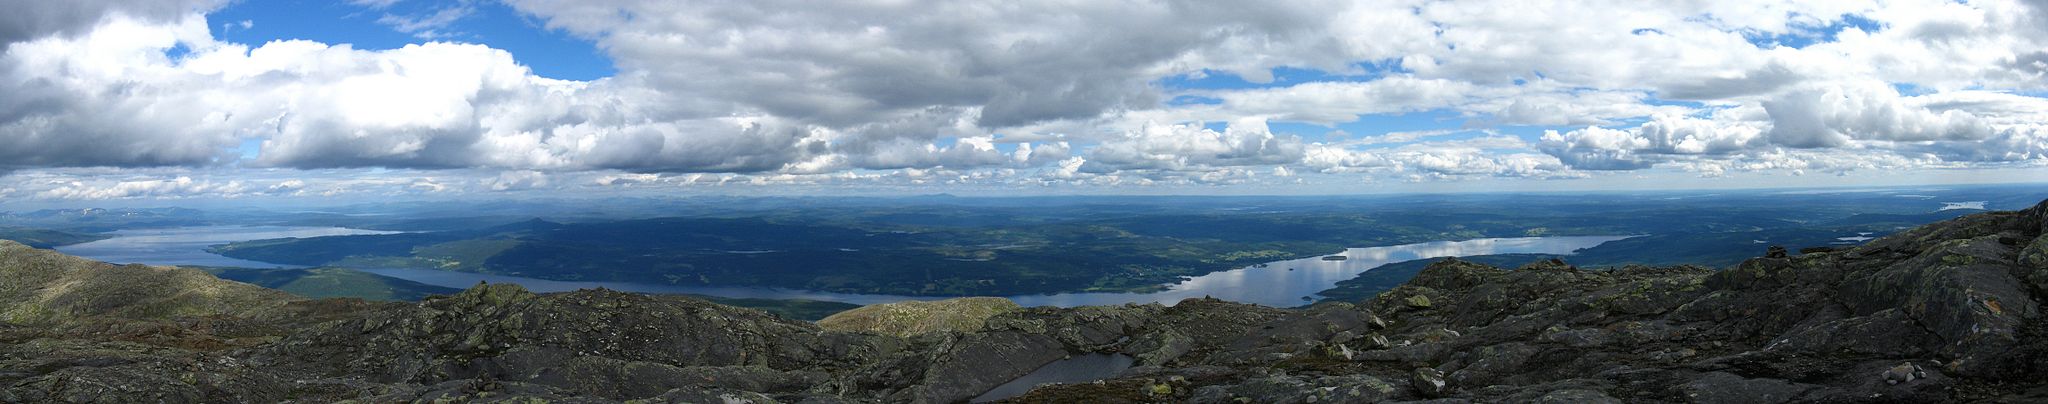 Blick auf den Kallsjön (Jämtland) vom Gipfel des Åreskutan im Juli 2010